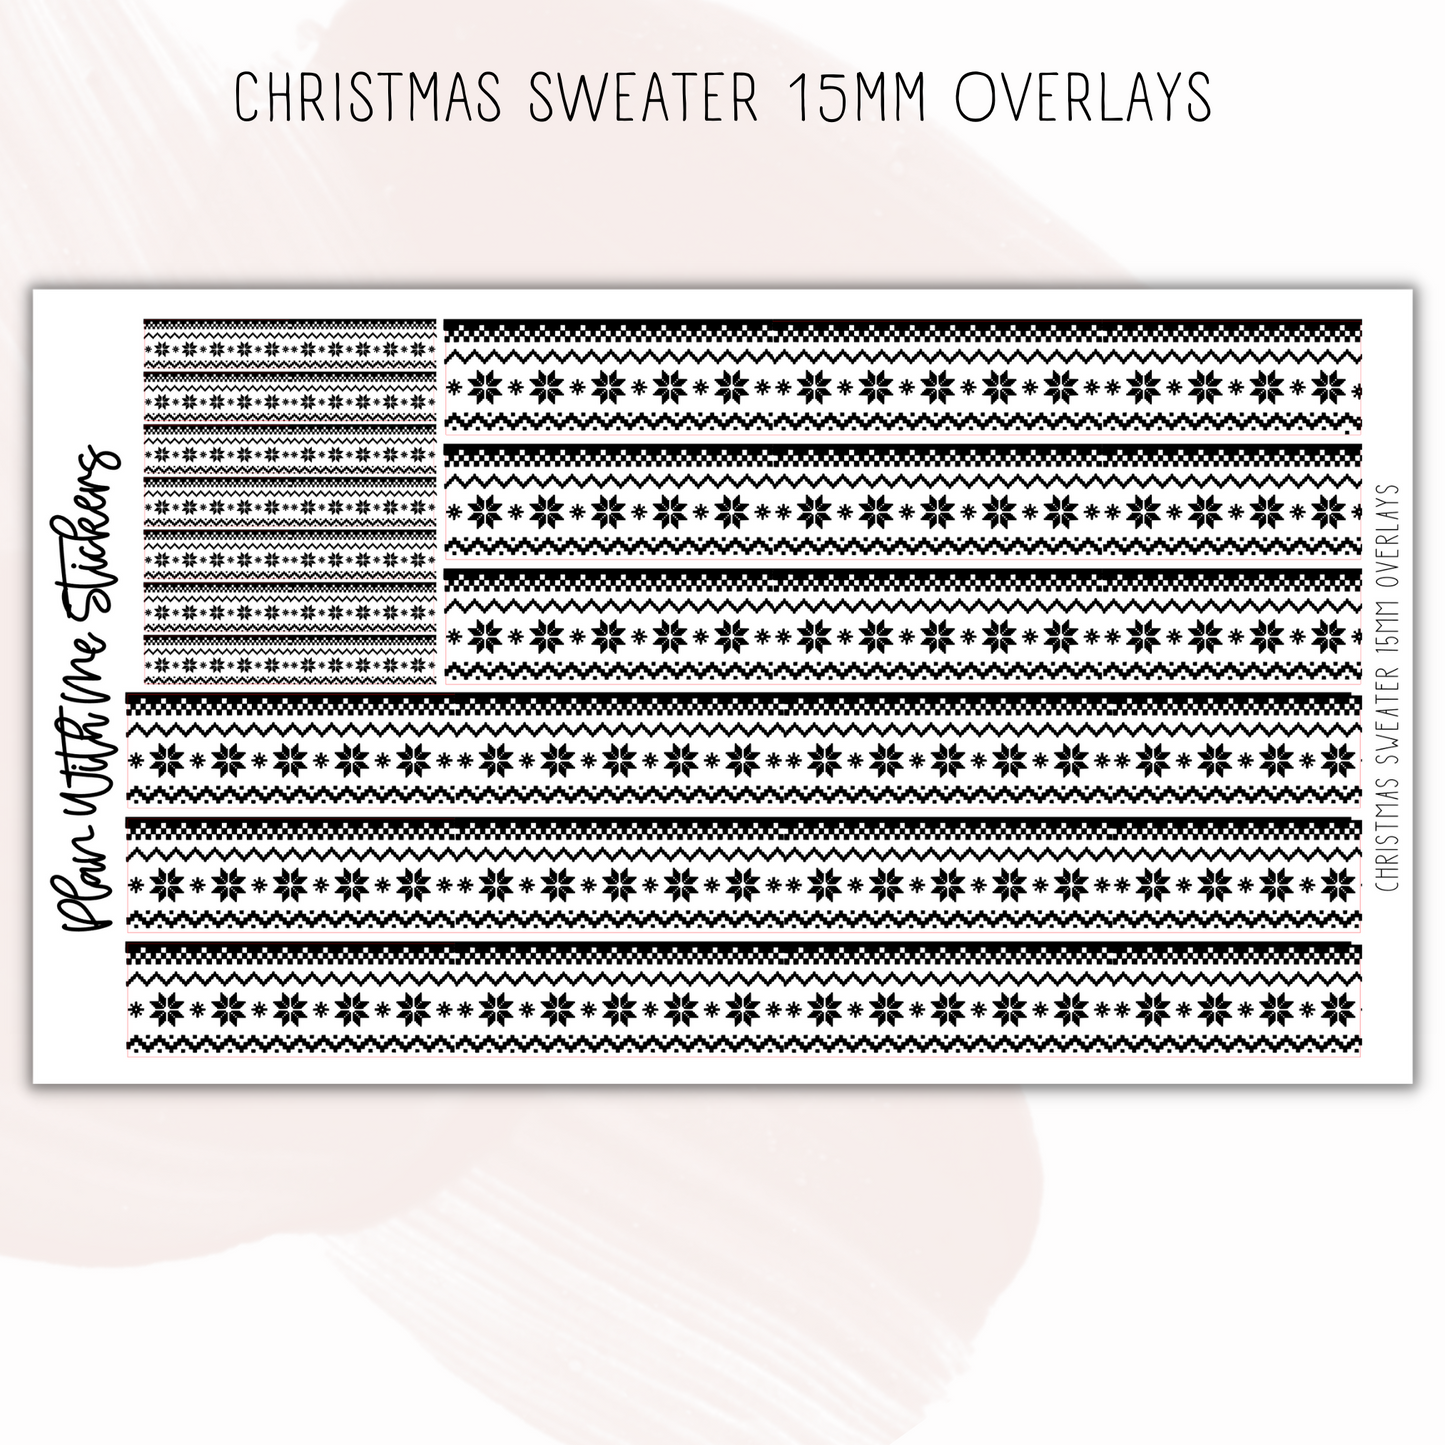 Christmas Sweater 15mm Overlays